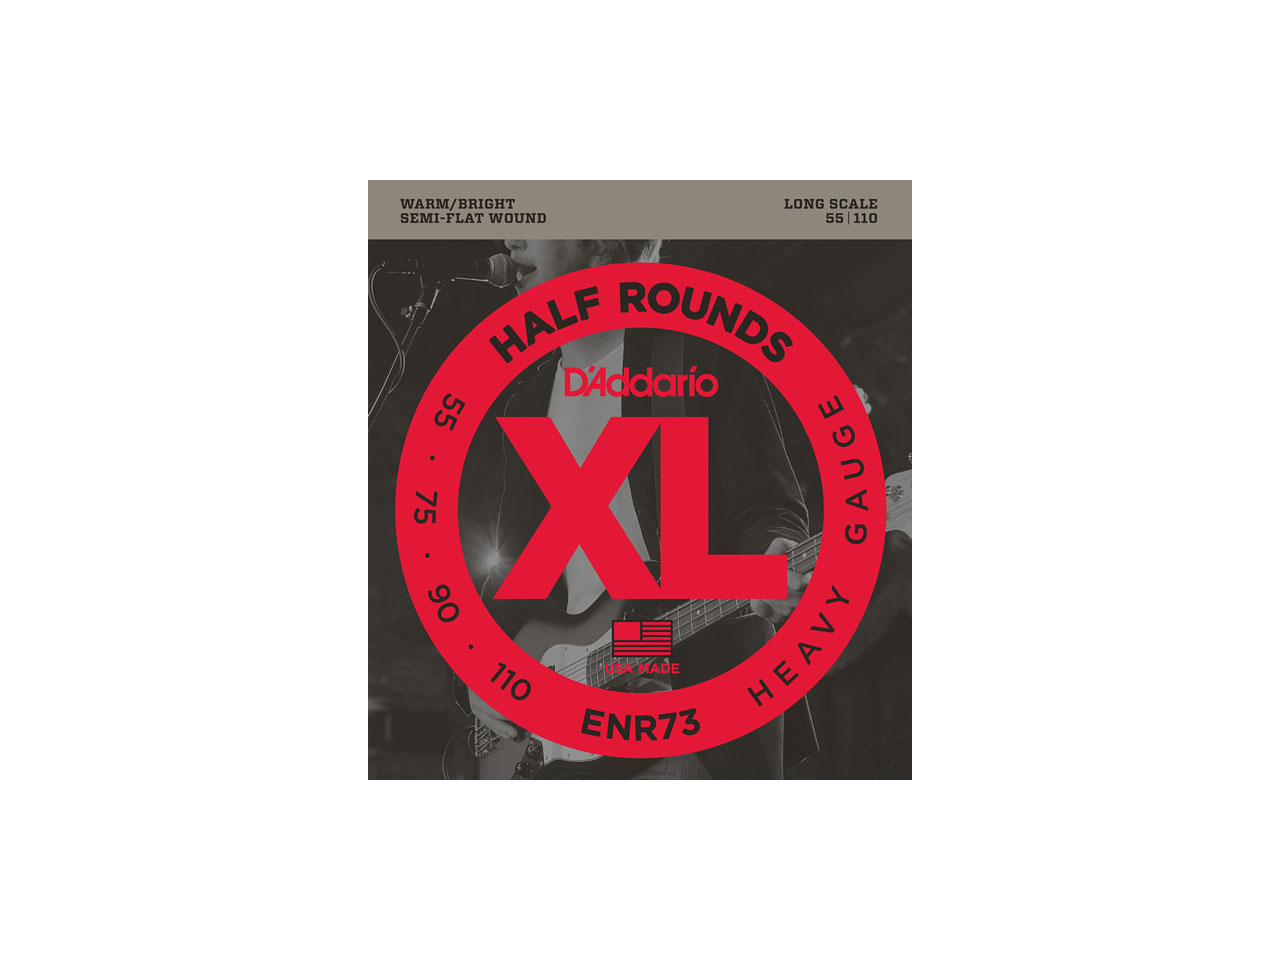 D'Addario(ダダリオ) XL Half Rounds Long / ENR73 (エレキベース弦)